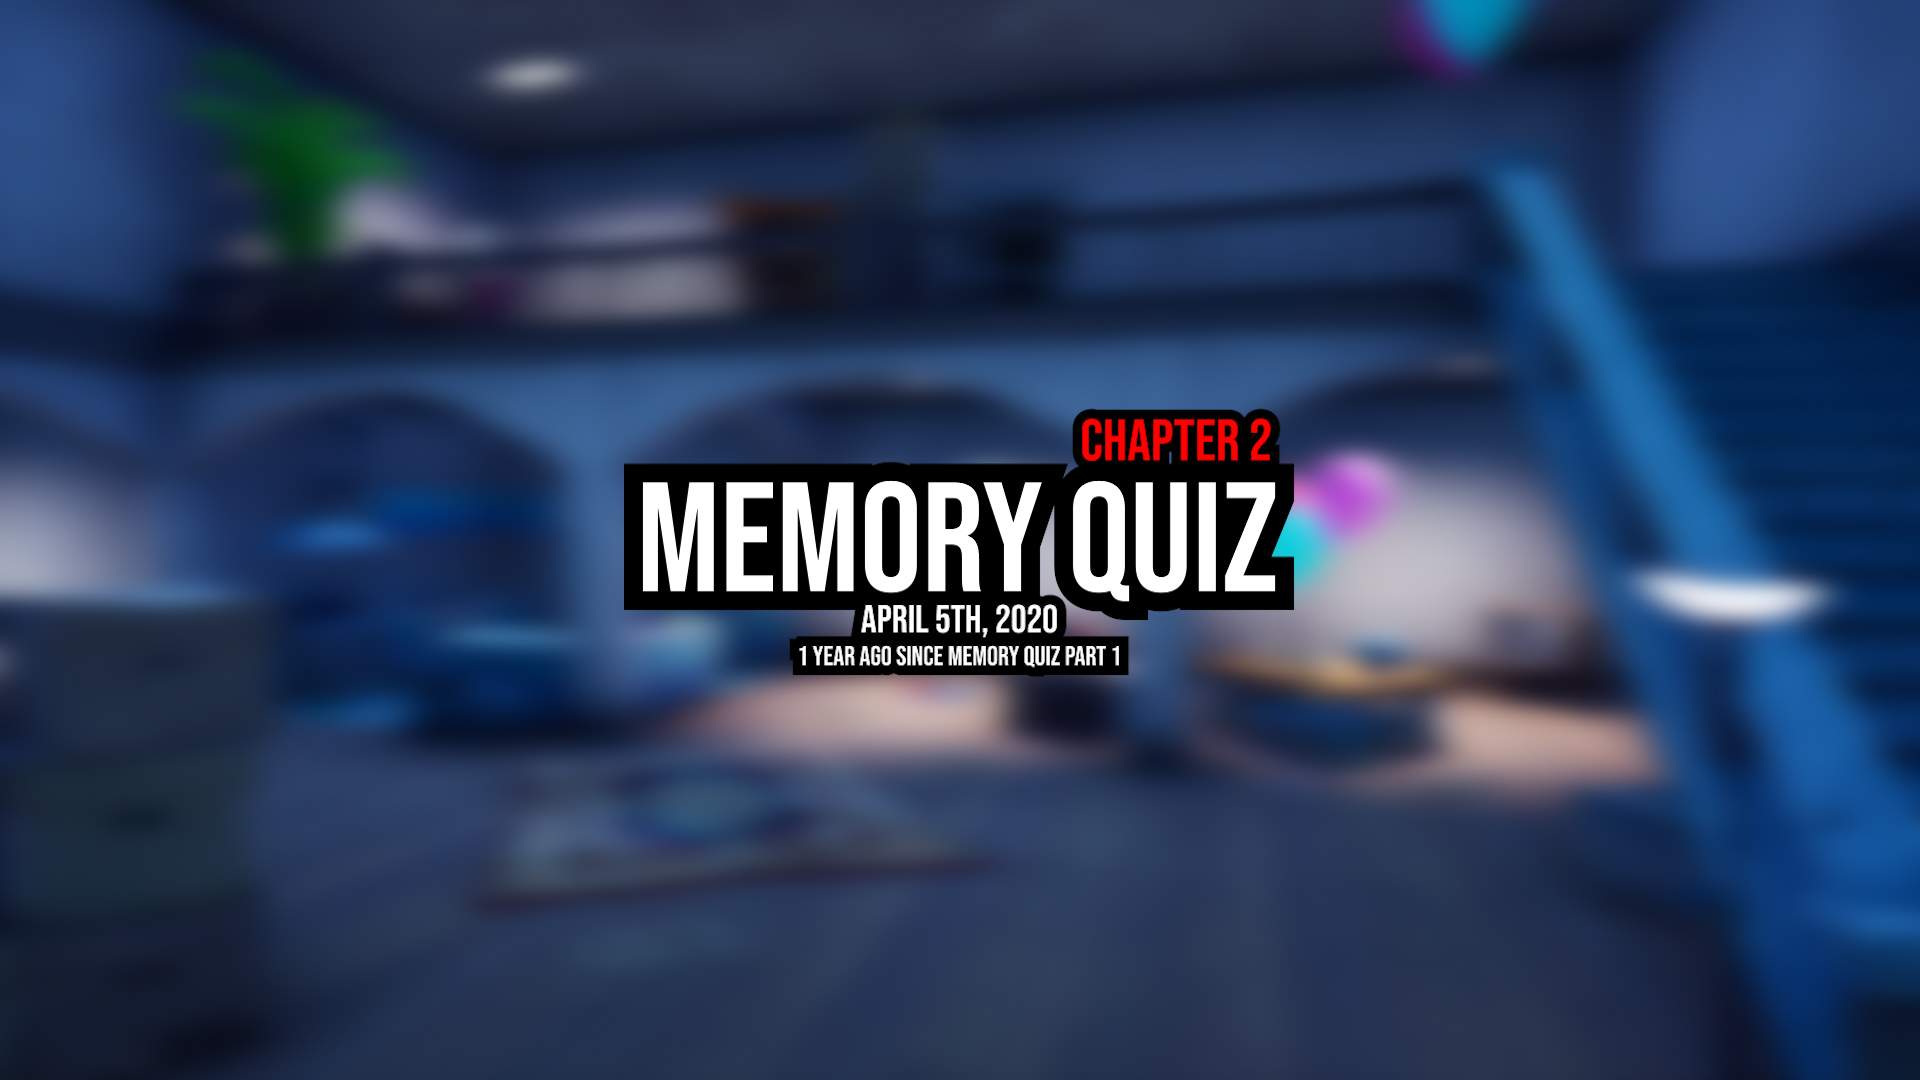 MEMORY QUIZ CHAPTER 2